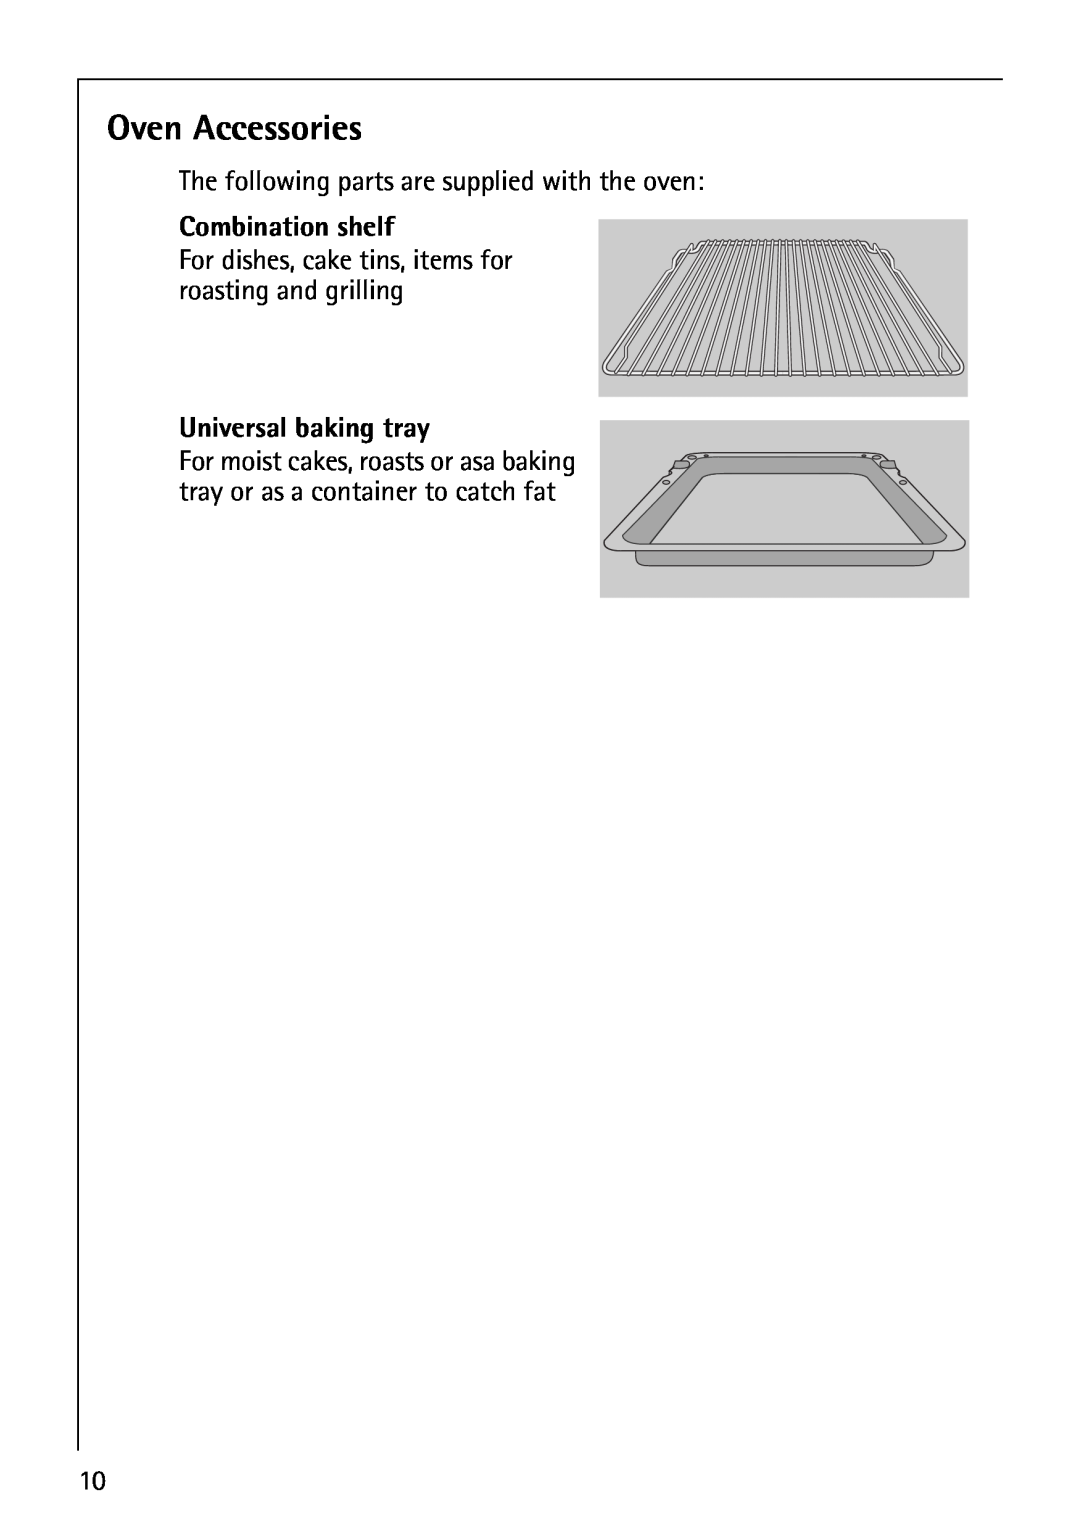 AEG B3040-1 manual Oven Accessories, Combination shelf, Universal baking tray 